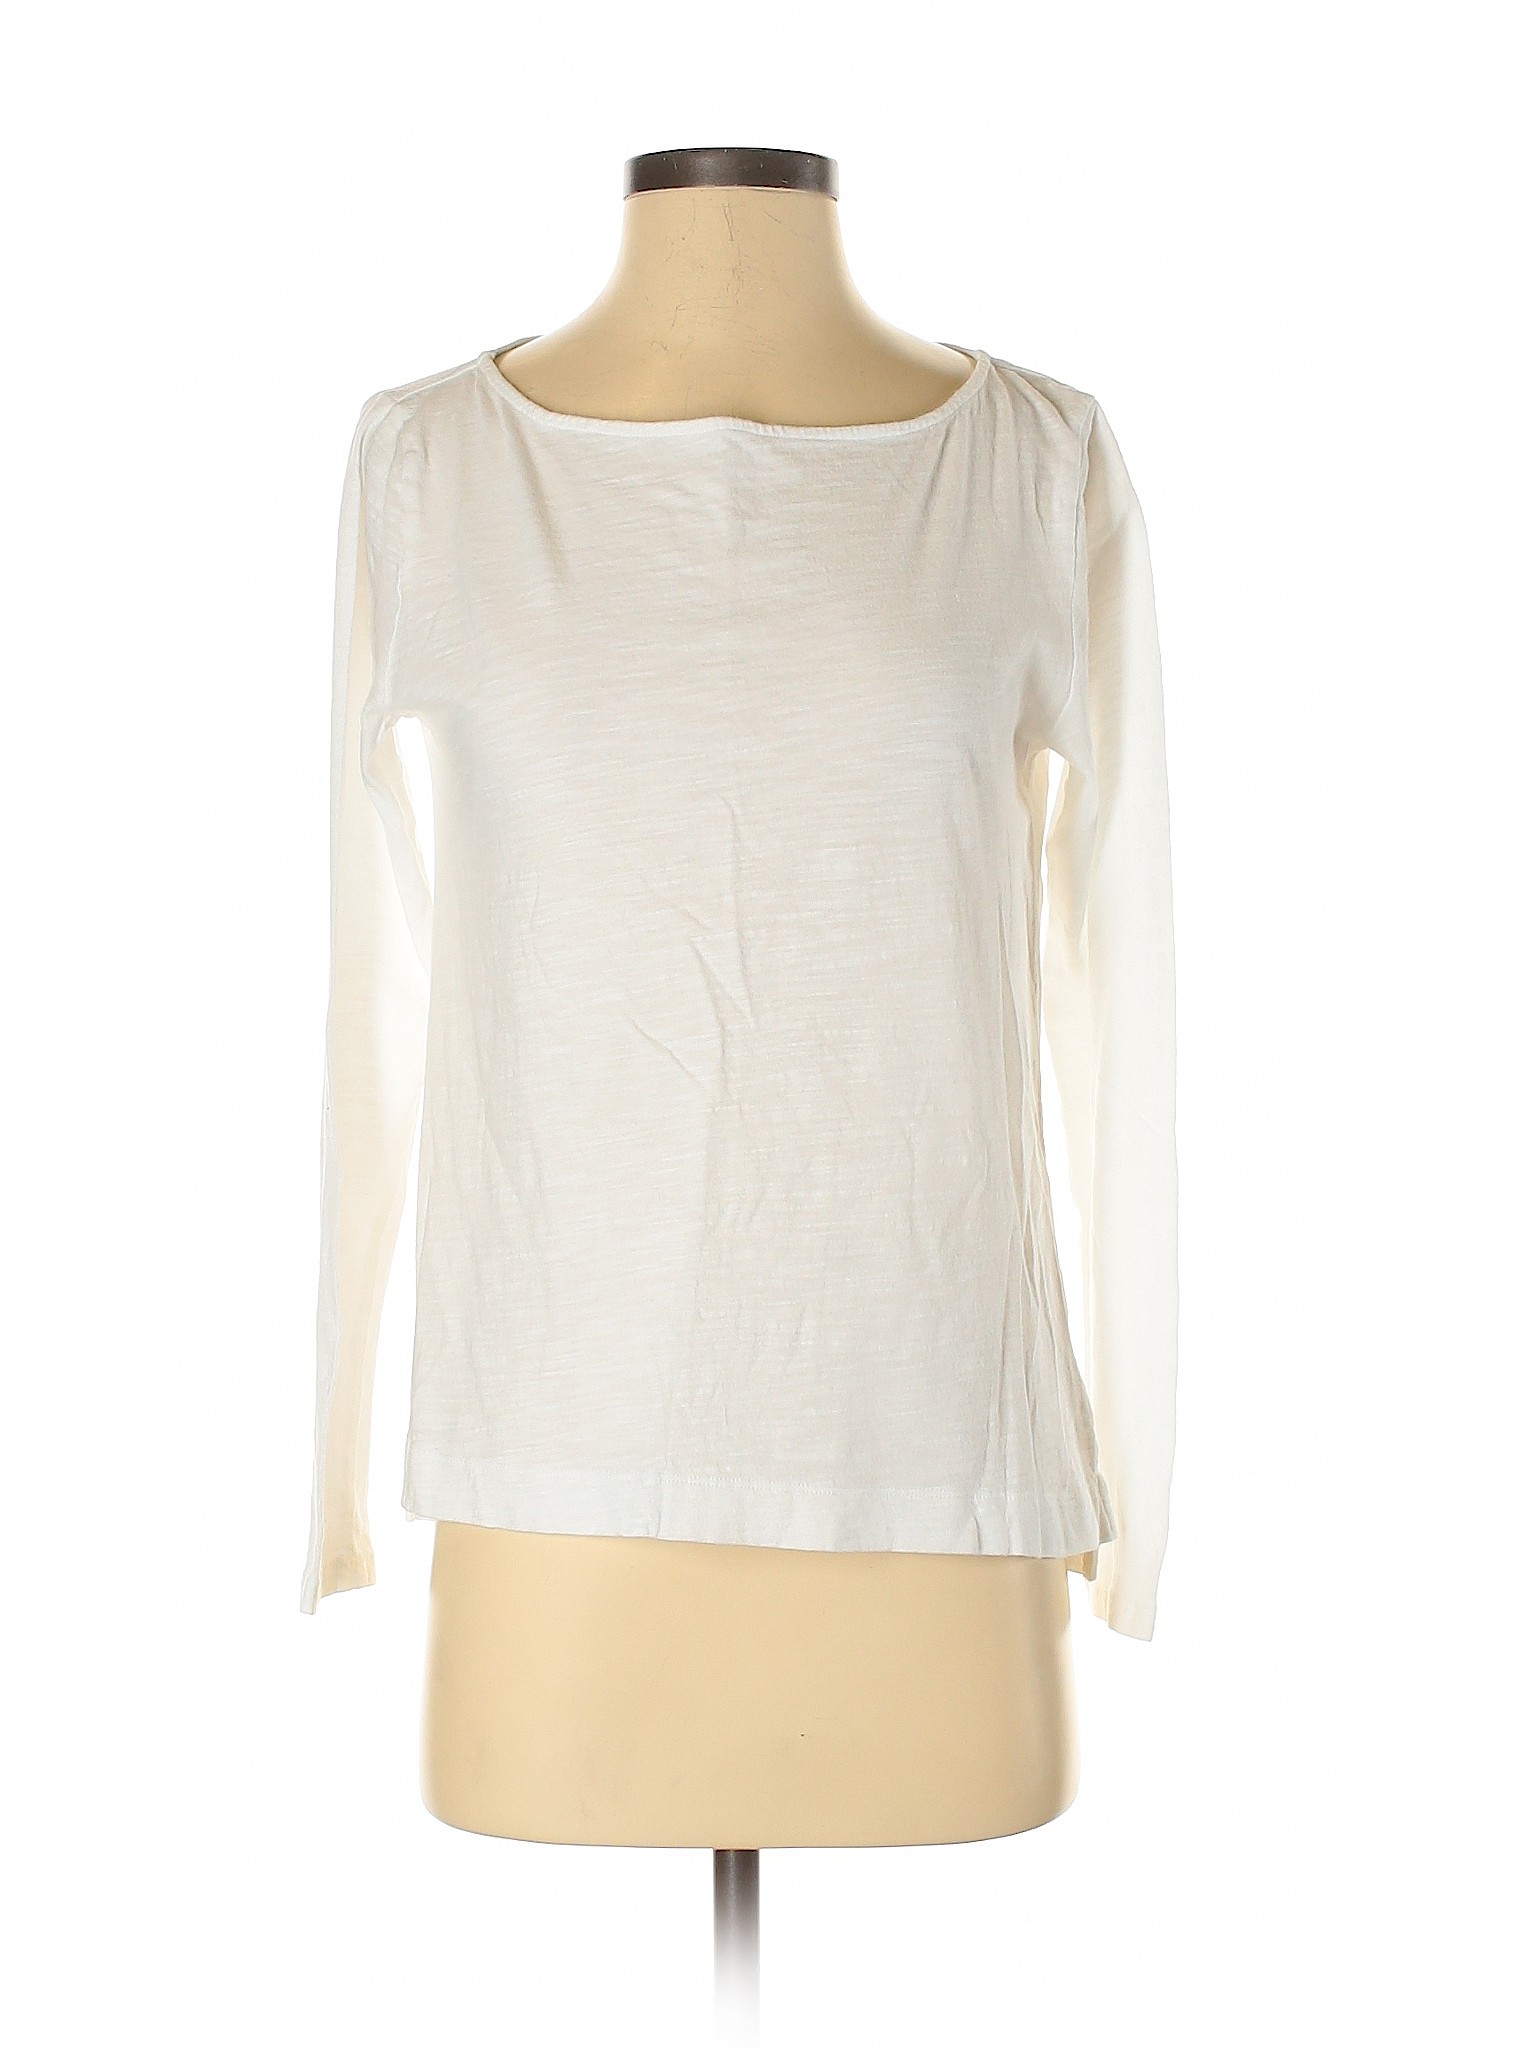 Banana Republic Women White Long Sleeve T-Shirt S | eBay